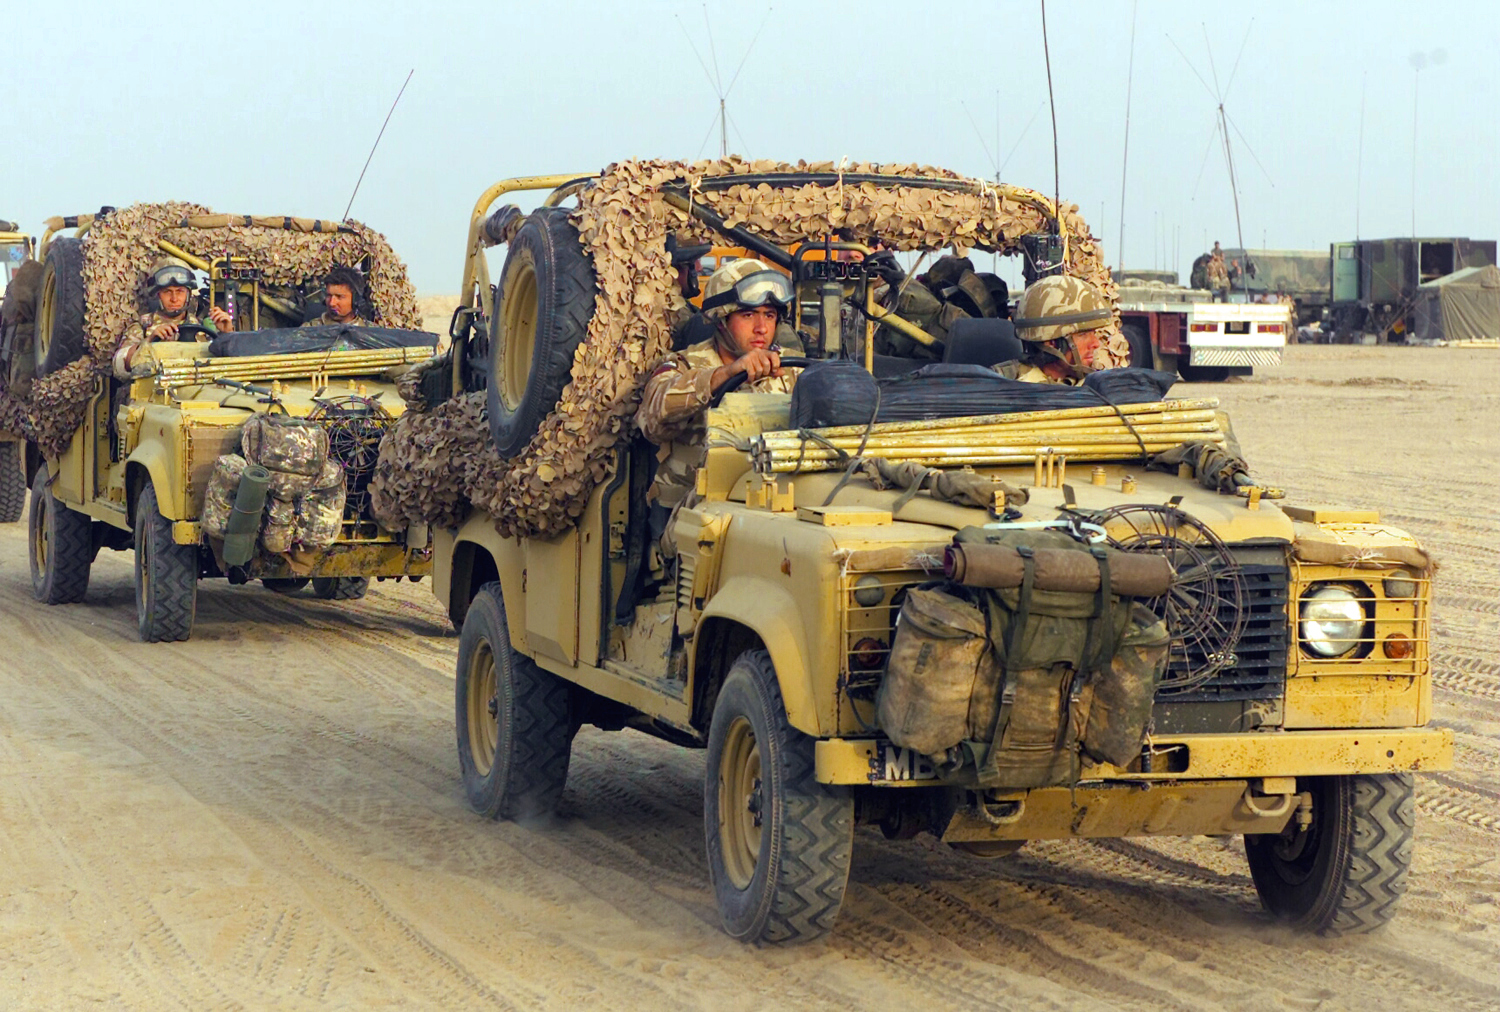 Image:Land Rover Defender 110 patrol vehicles